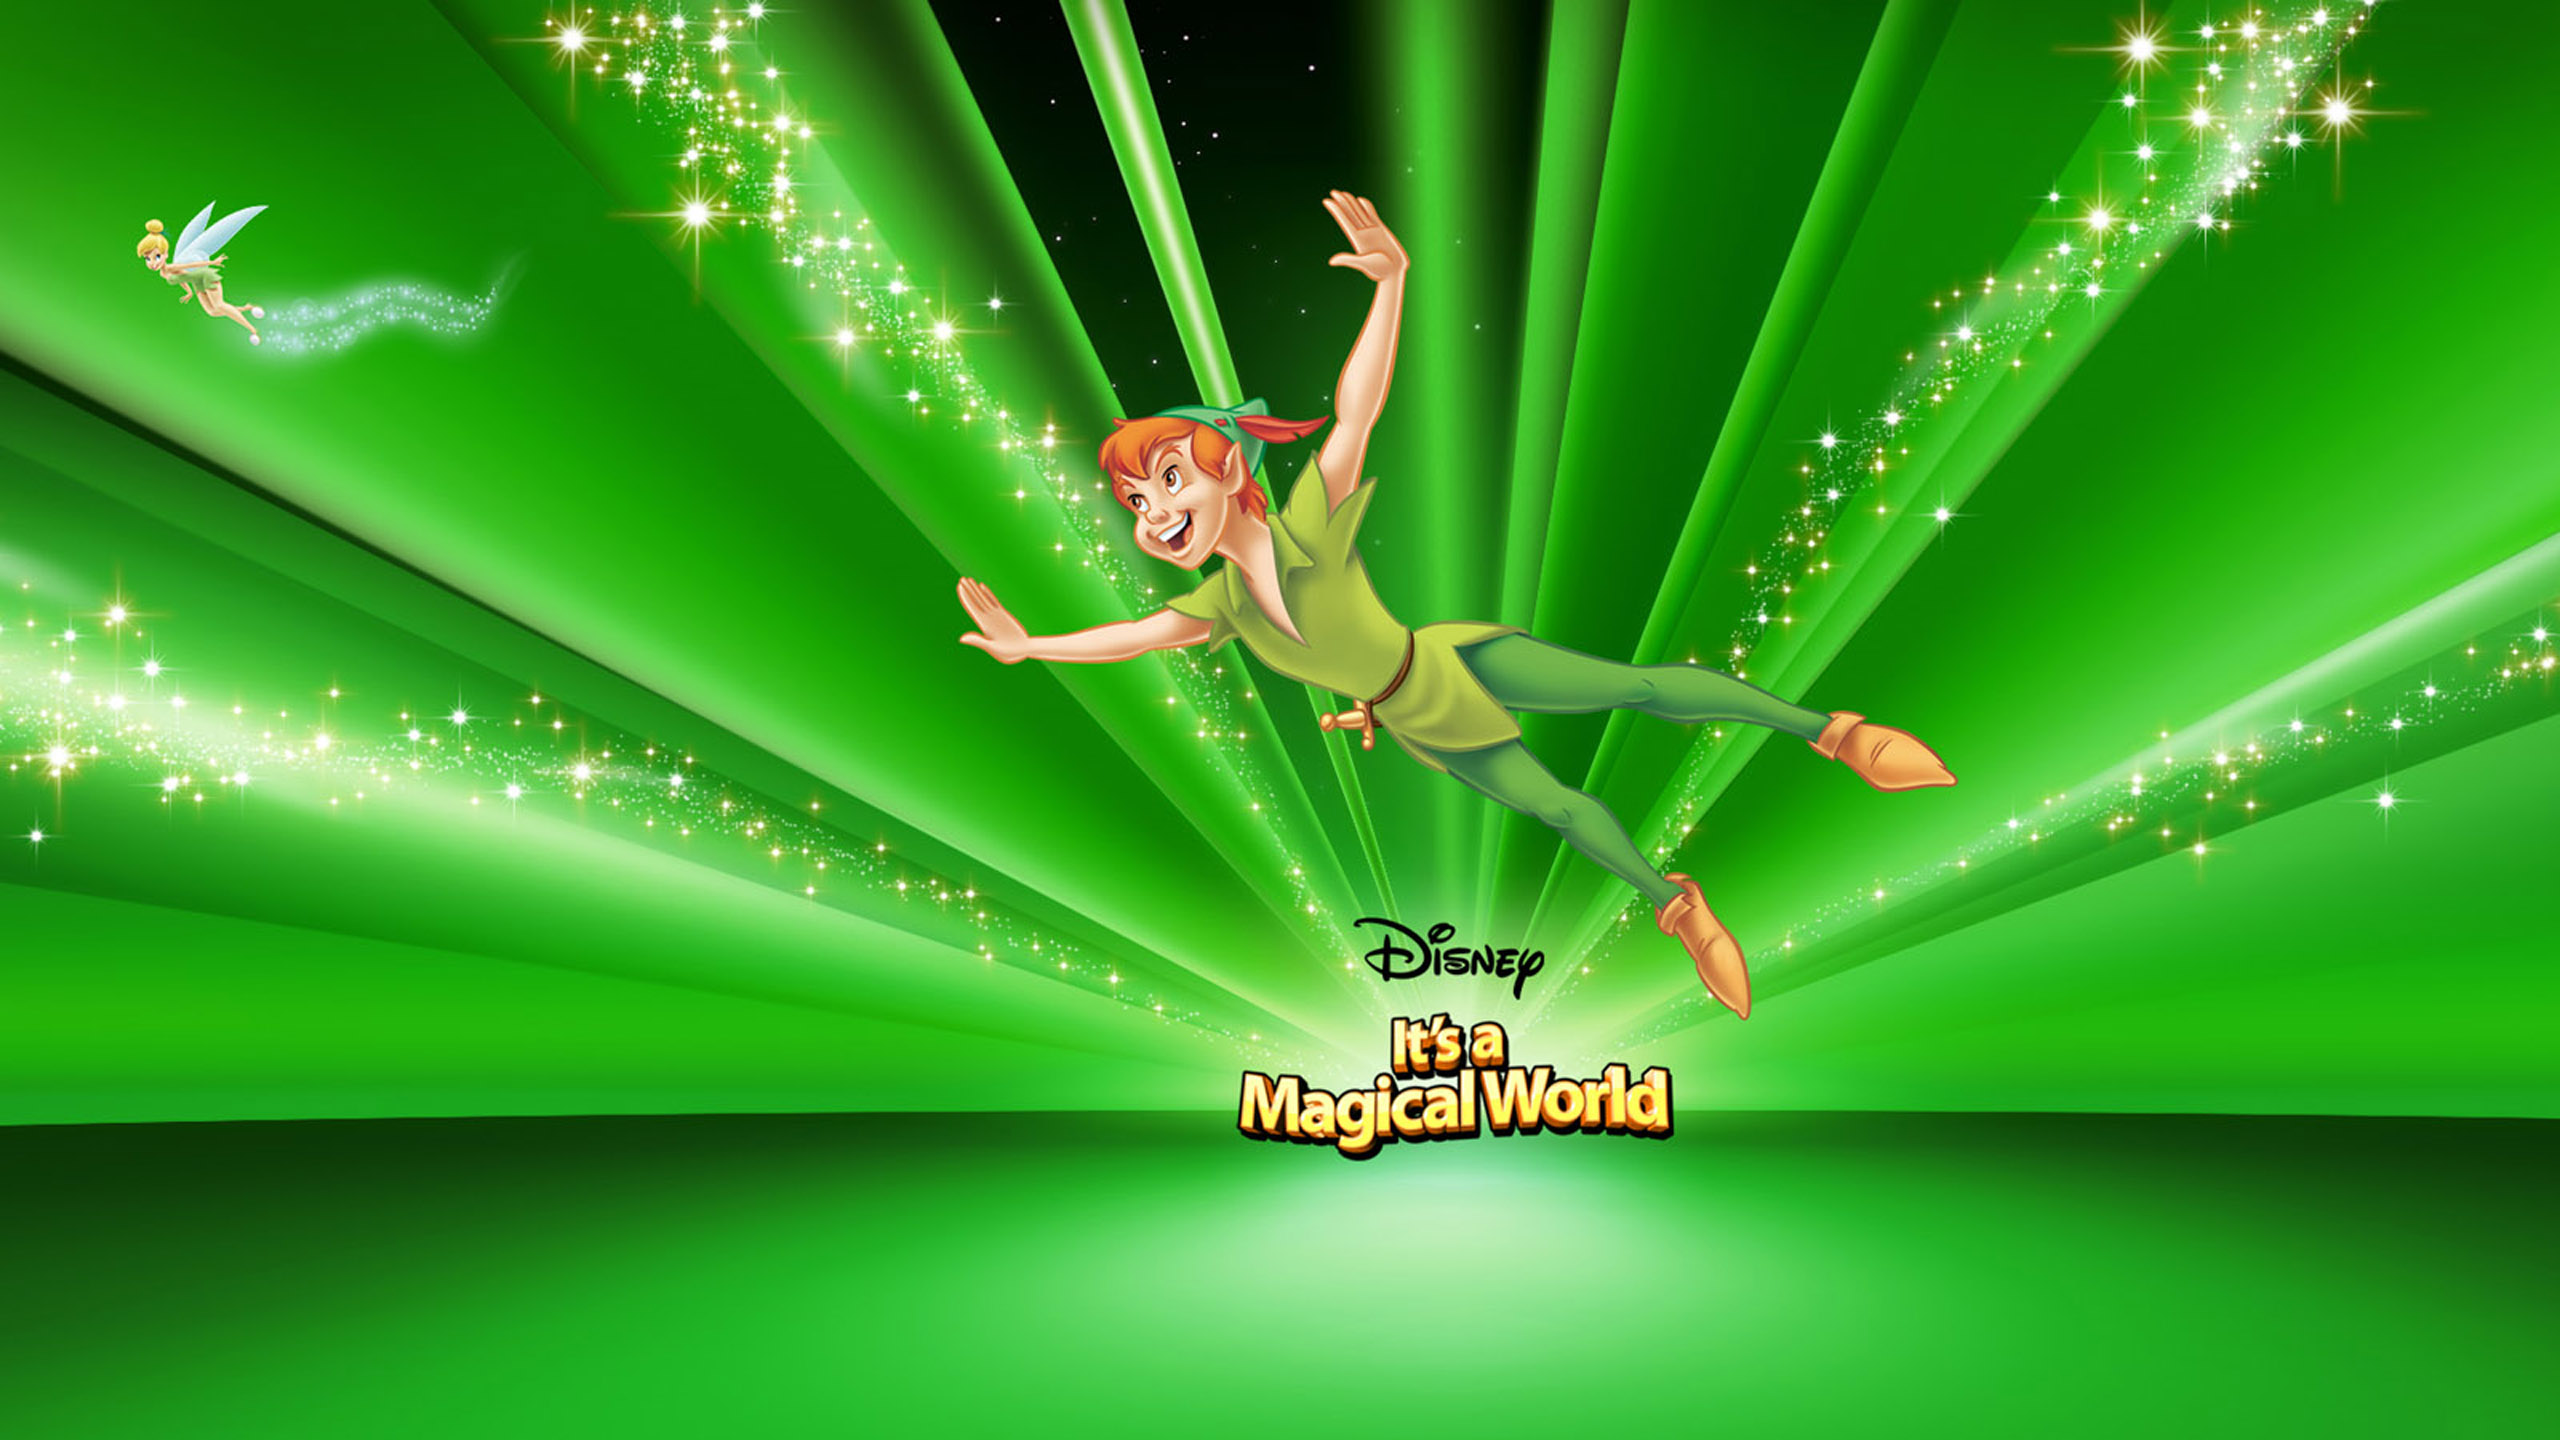 Peter Pan Cartoons Disney It'sa Magical World Green Background